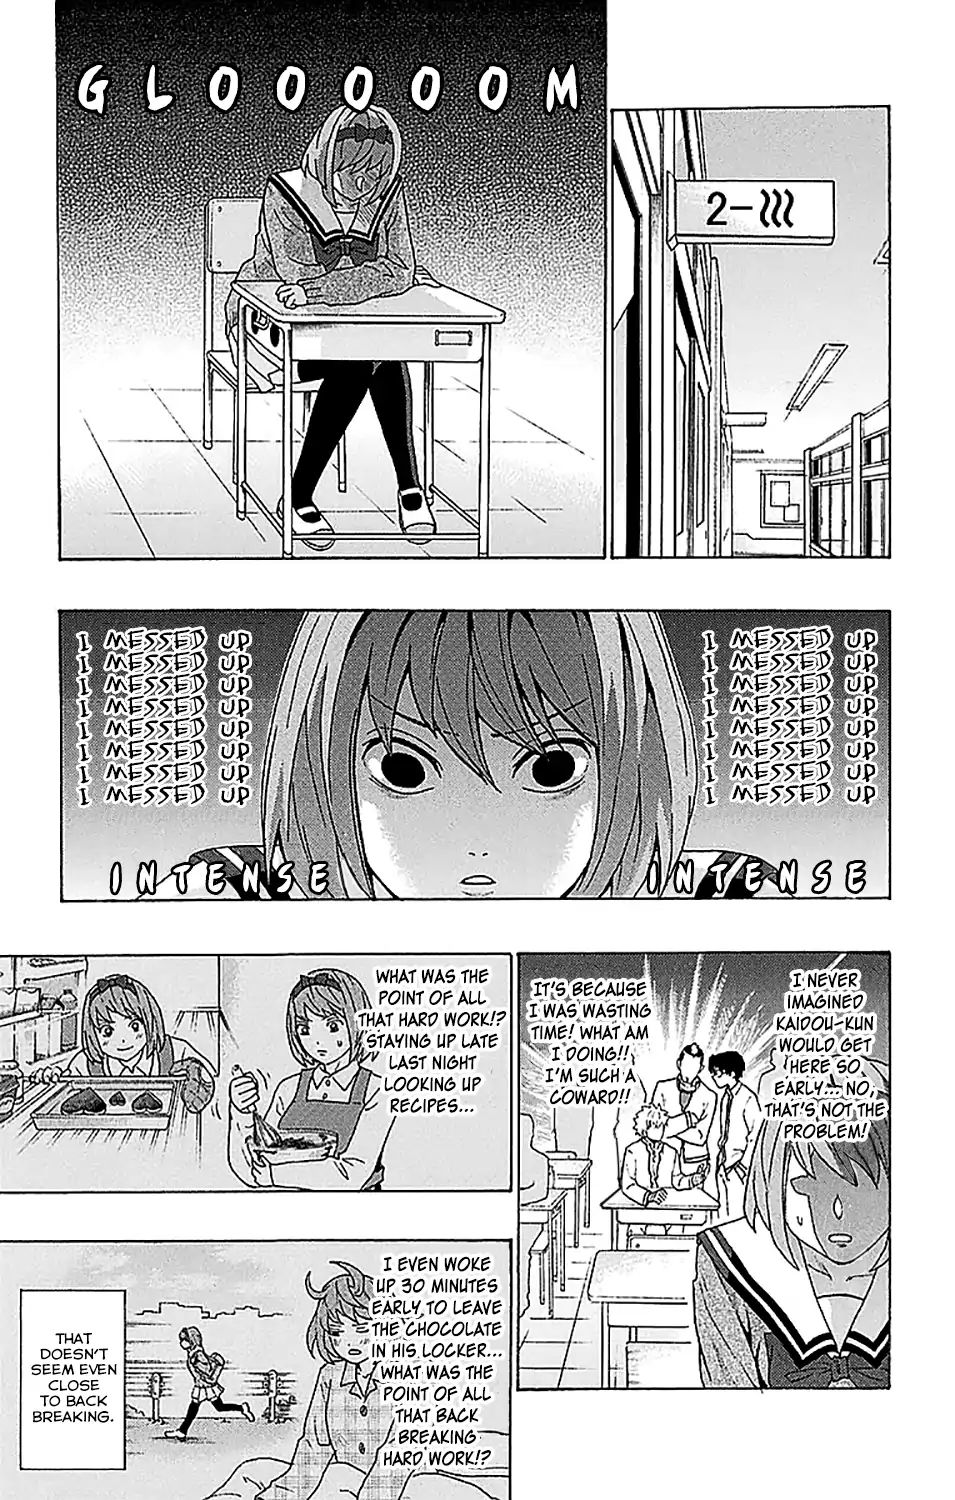 Saiki Kusuo no Sainan Vol.22 Chapter 231: Out Of Sync Boy Girl Relapsionships (First Half)